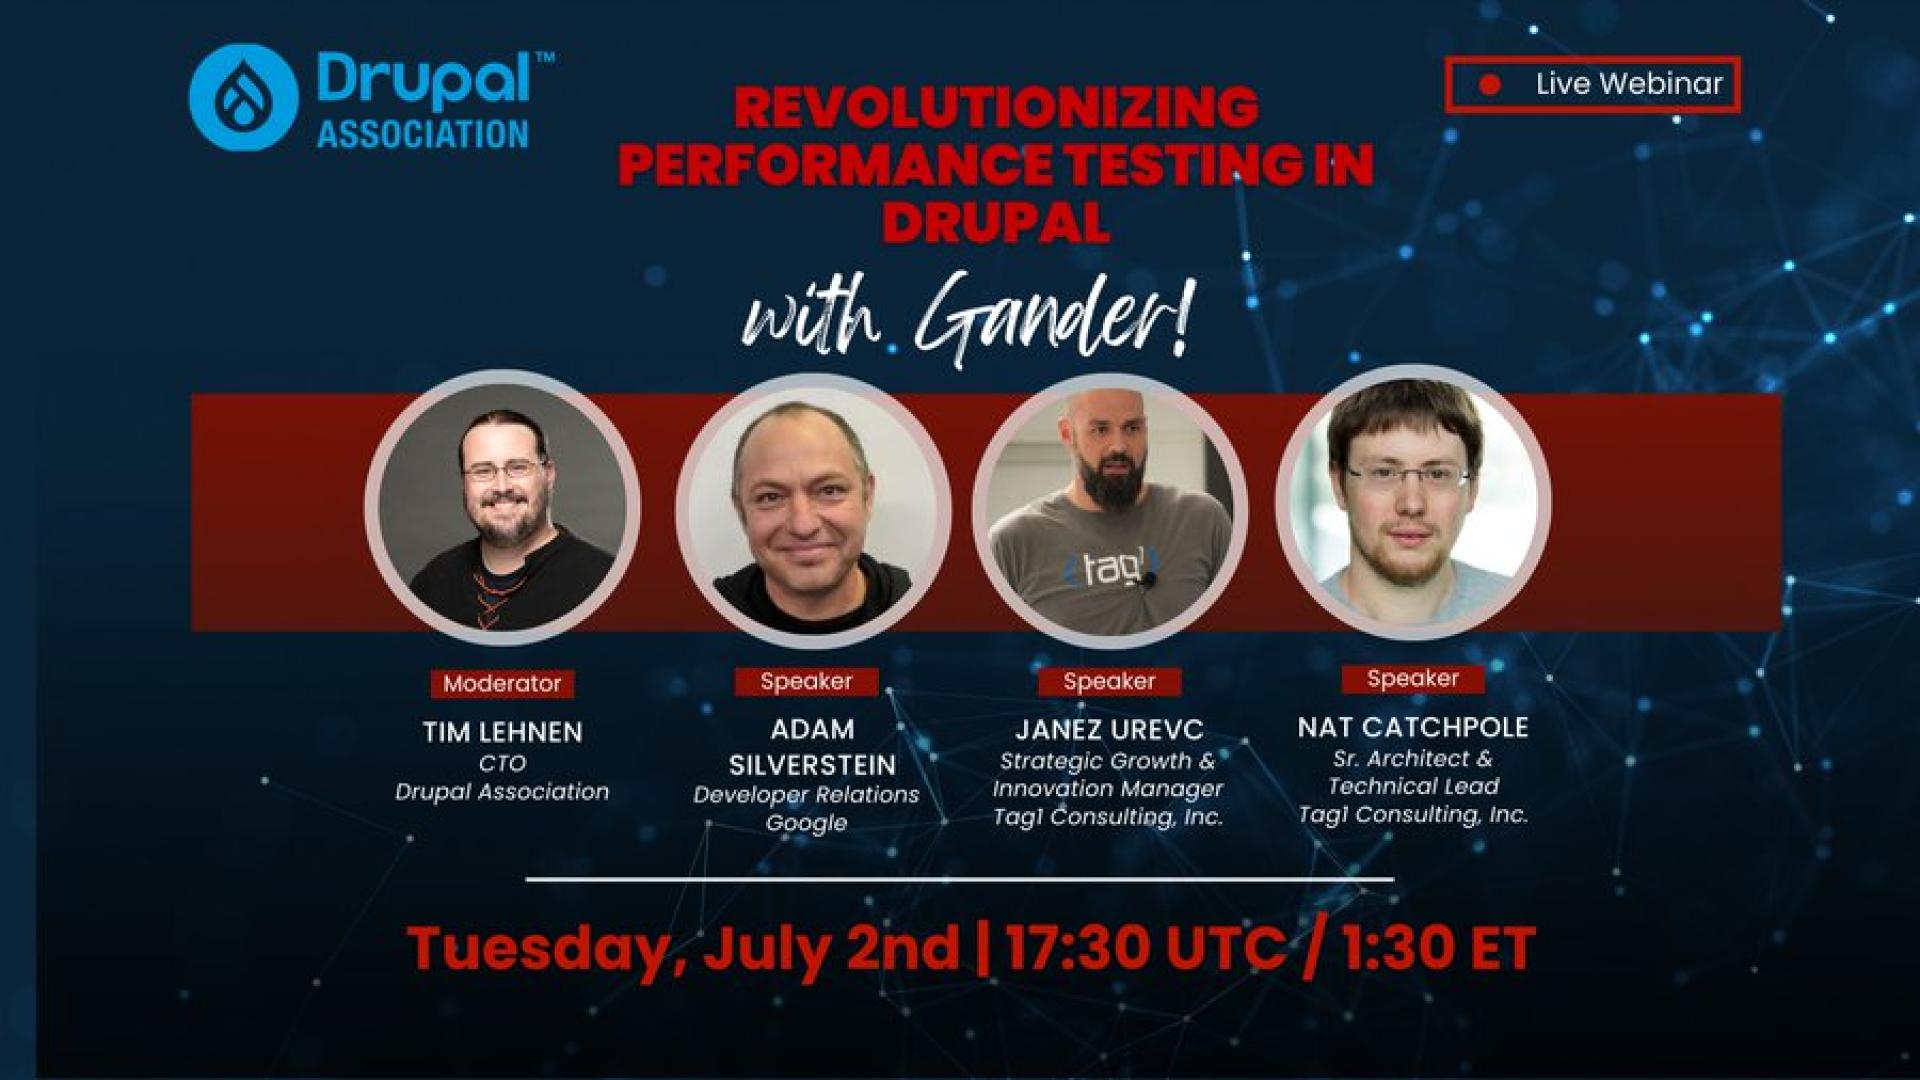 Revolutionizing performance testing in Drupal with Gander